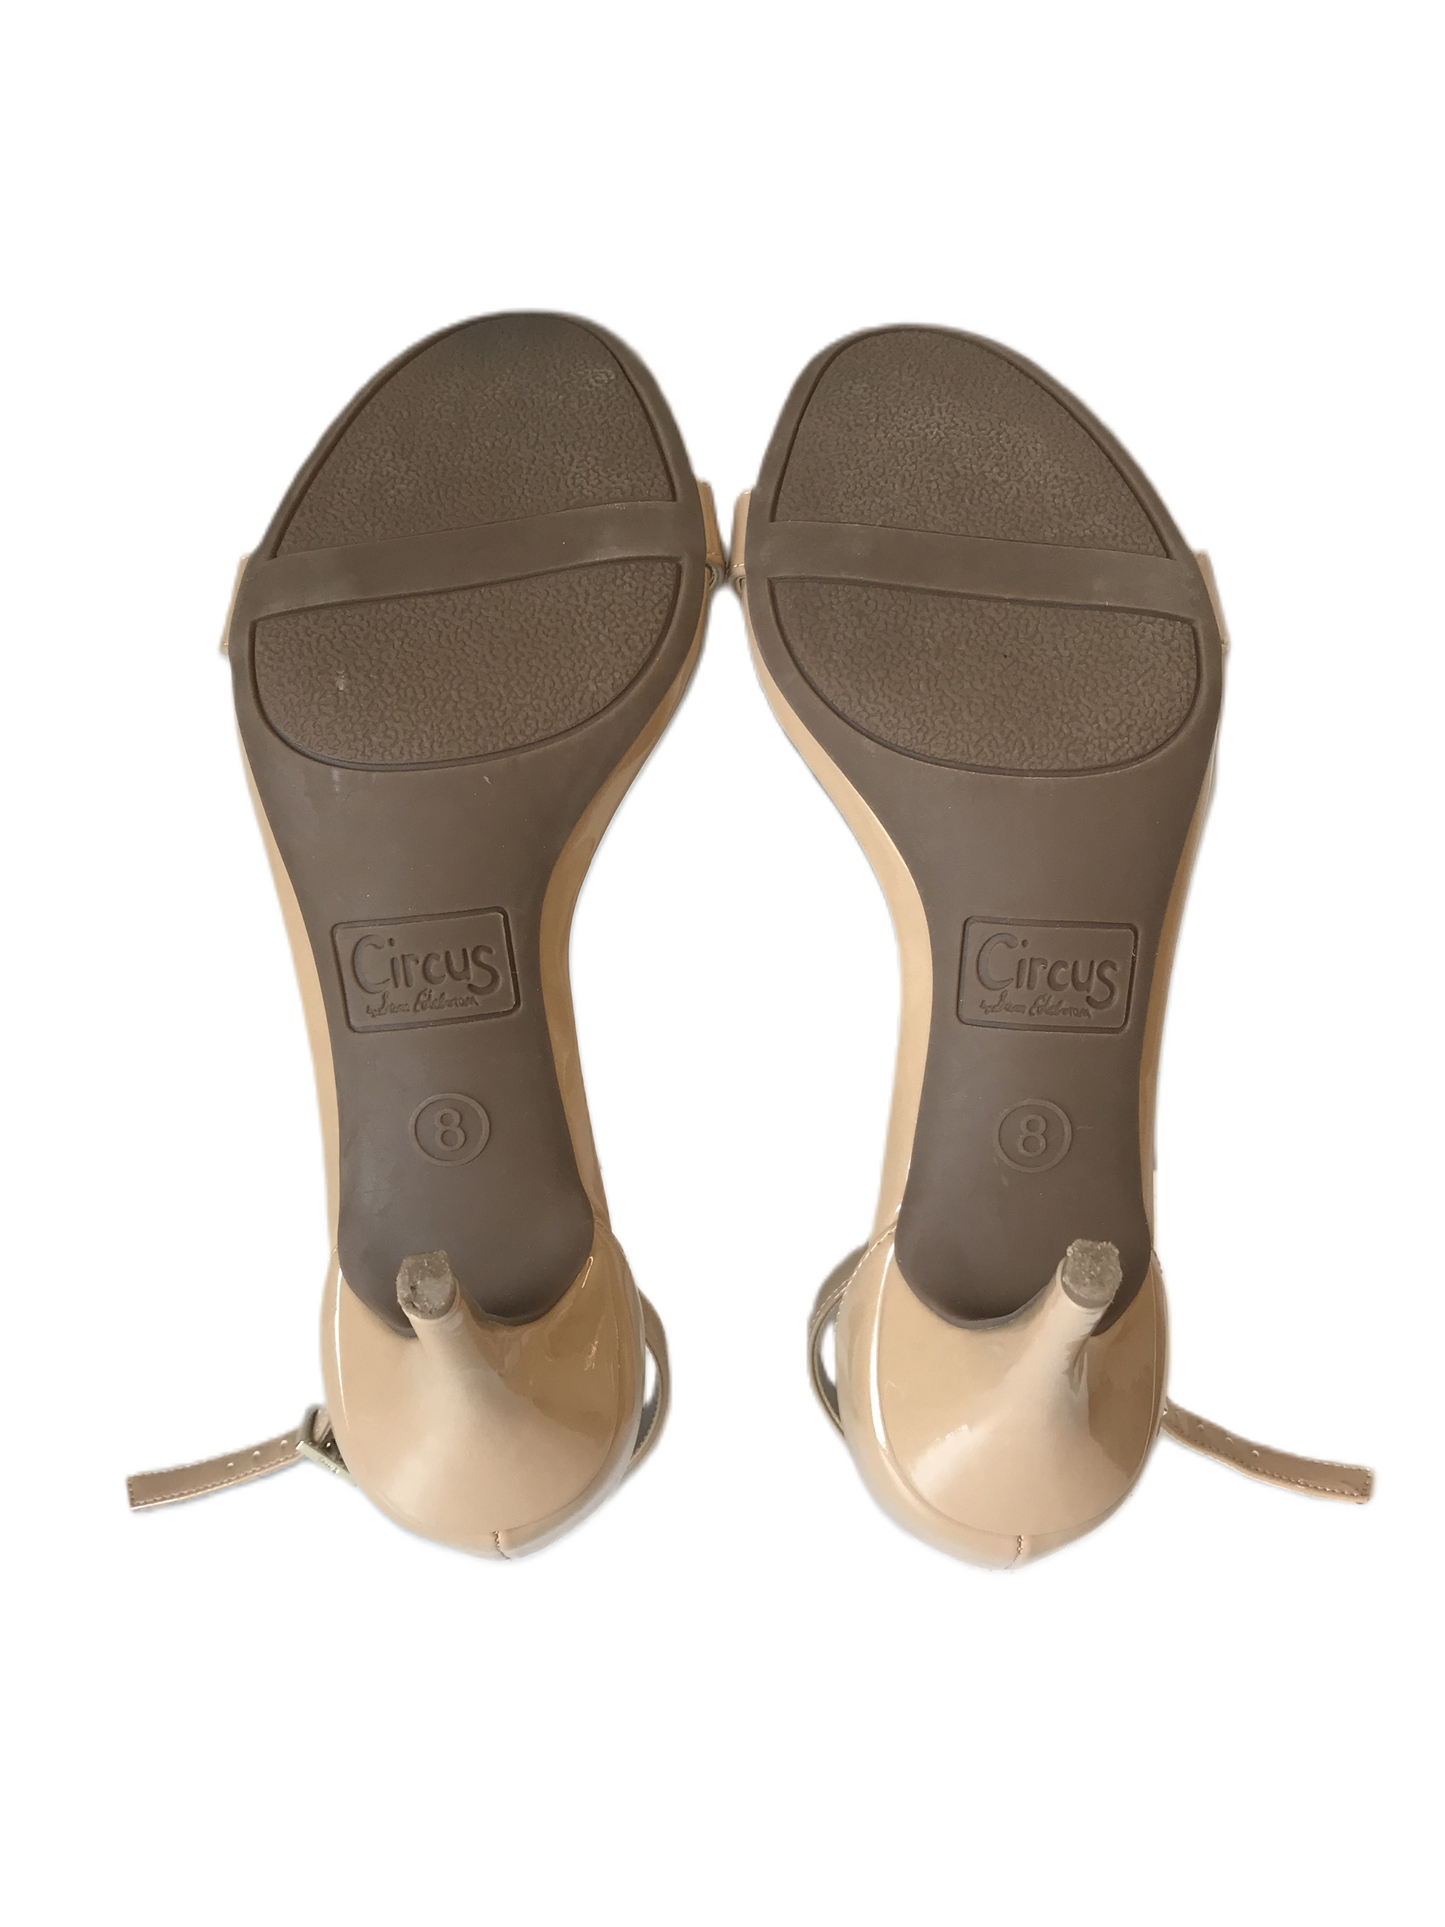 Shoes Heels Stiletto By Sam Edelman  Size: 8